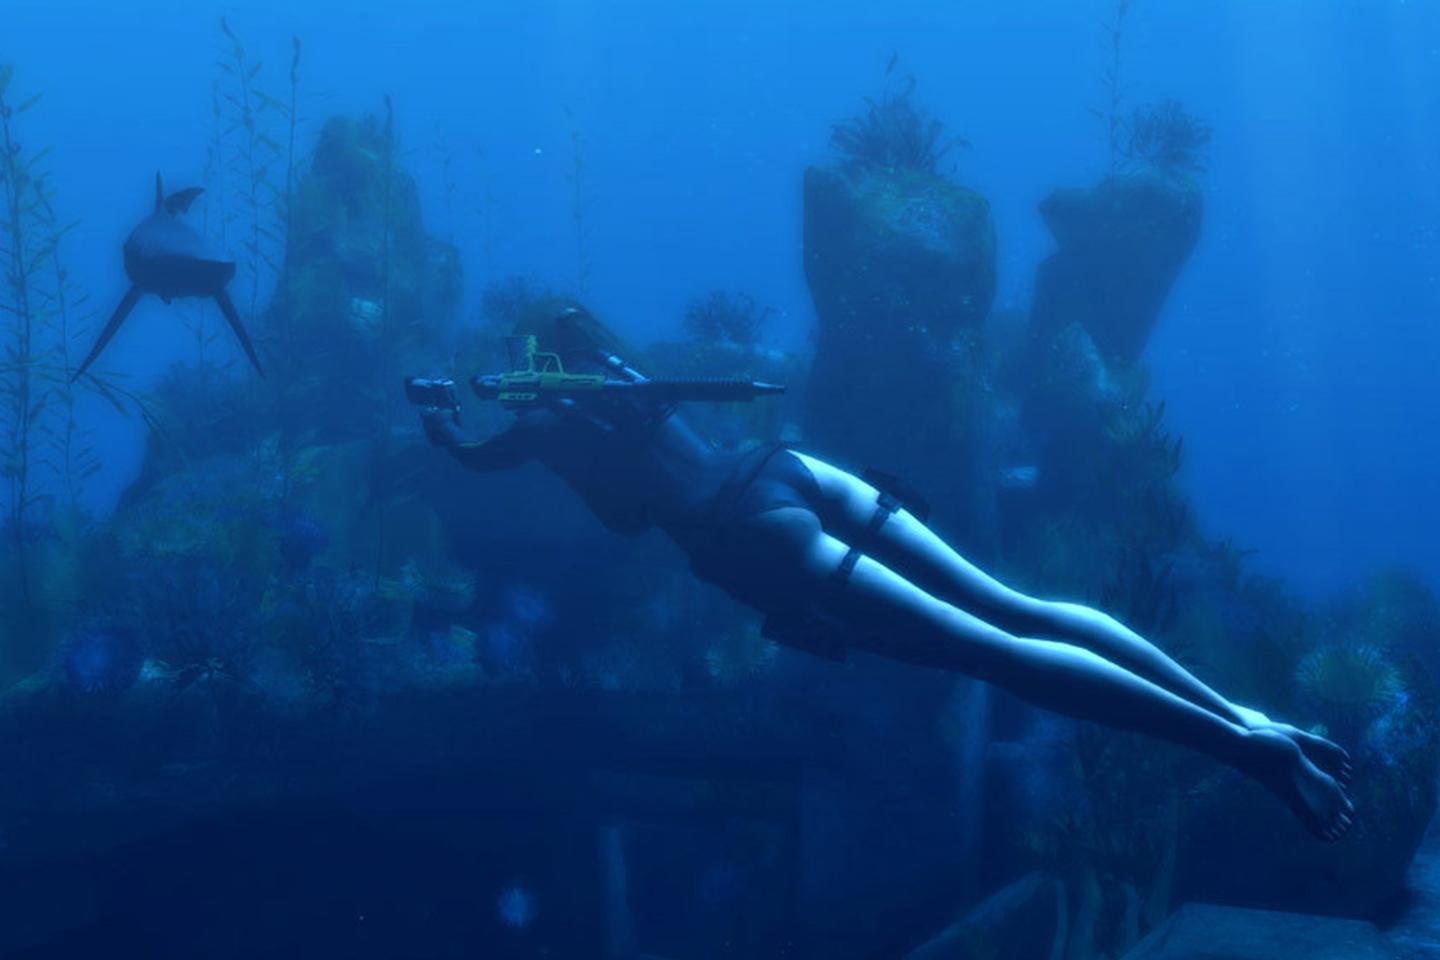 Lara wearing skuba gear underwater pointing gun toward approaching shark.